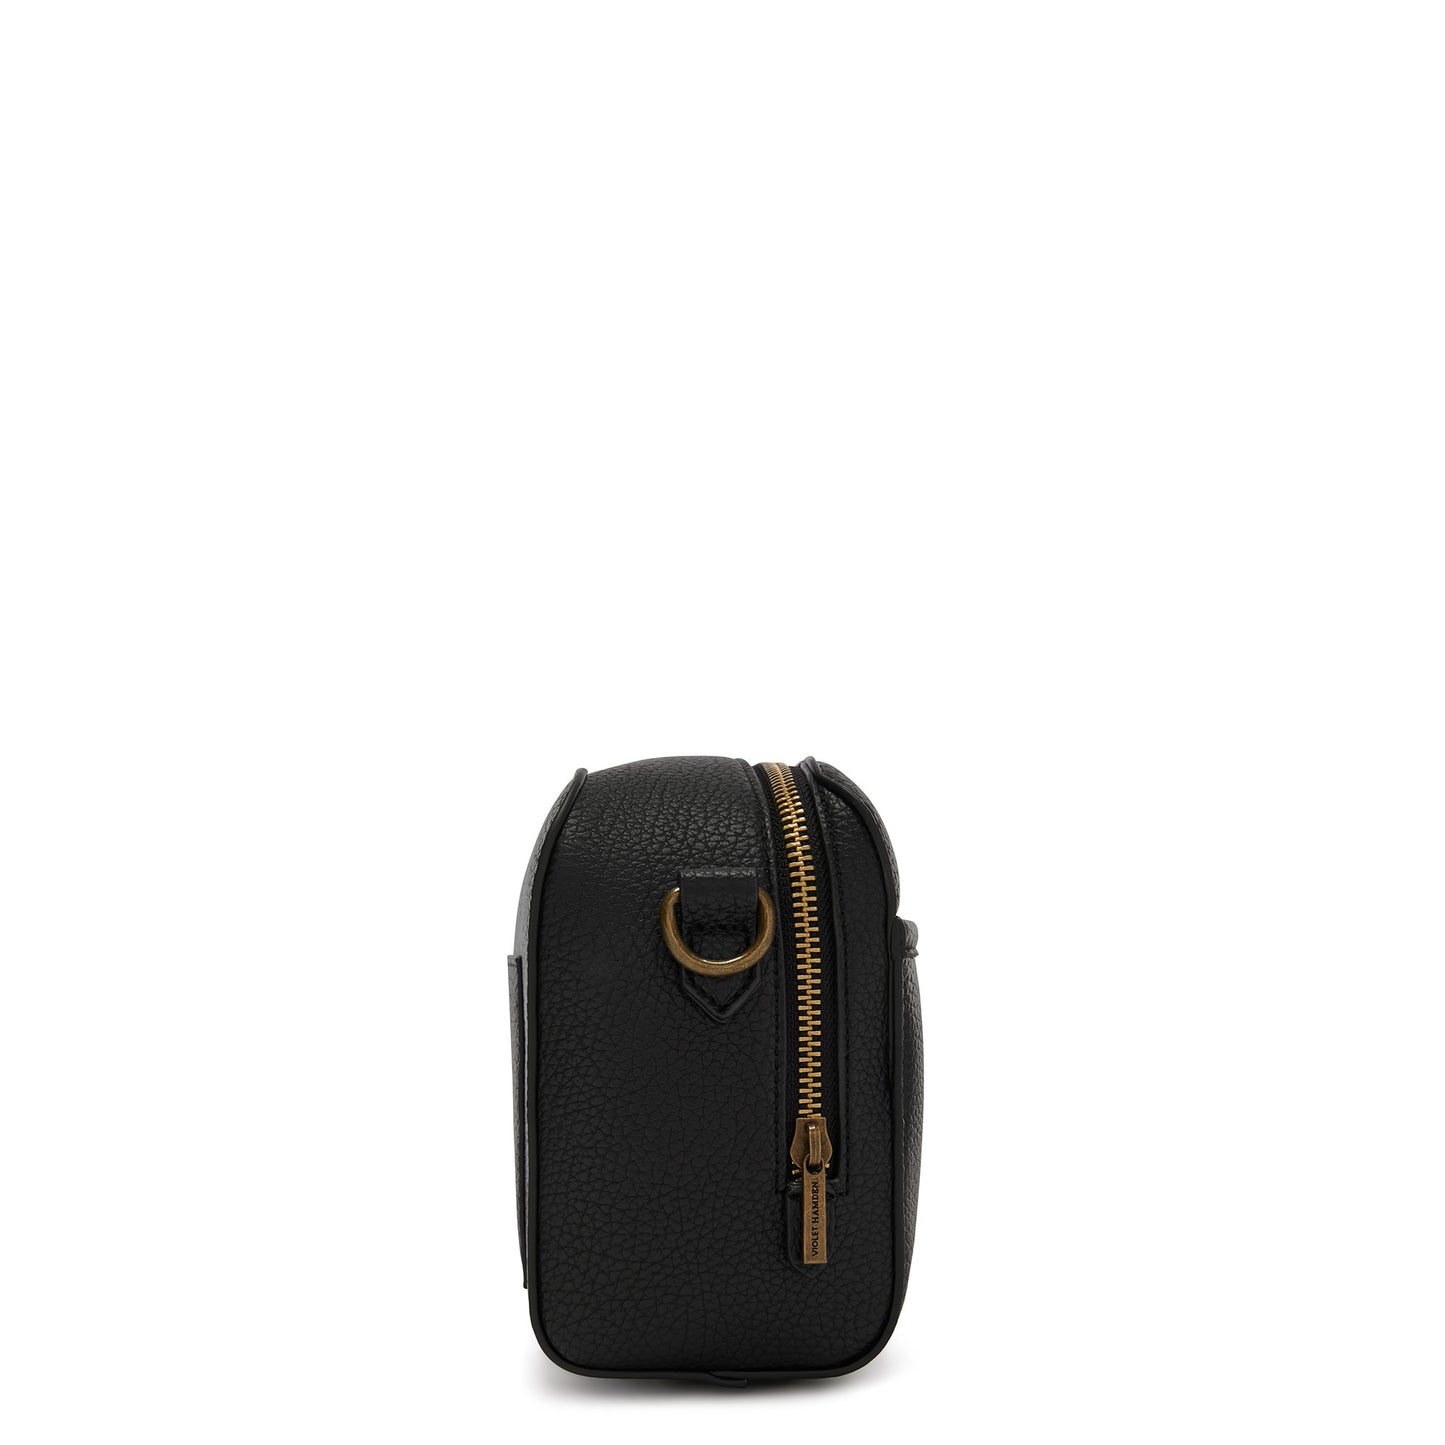 Essential Bag svart crossbody väska